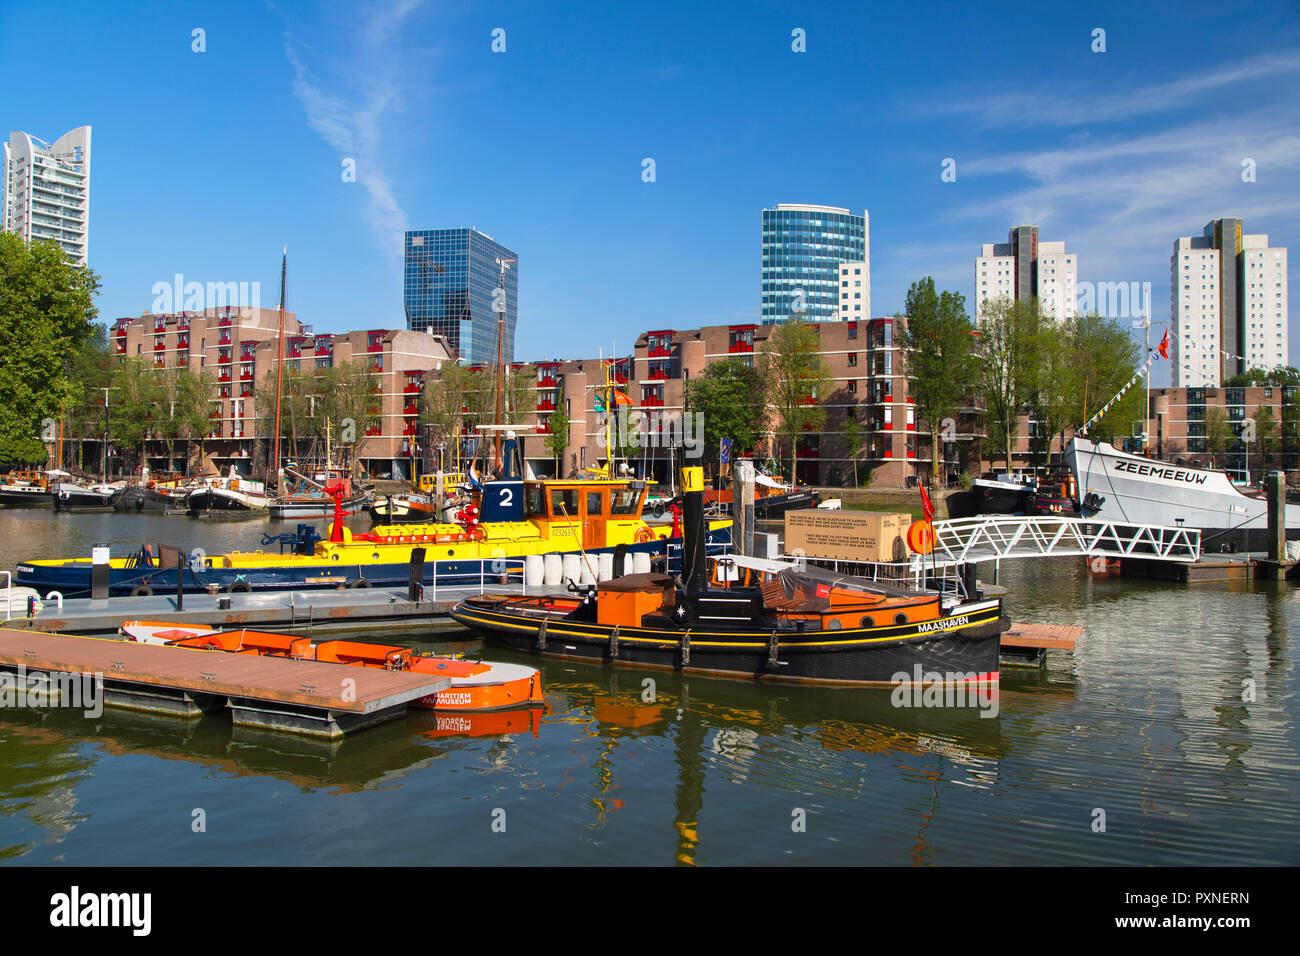 Maritime Museum, Rotterdam, Zuid Holland, Netherlands Stock Photo